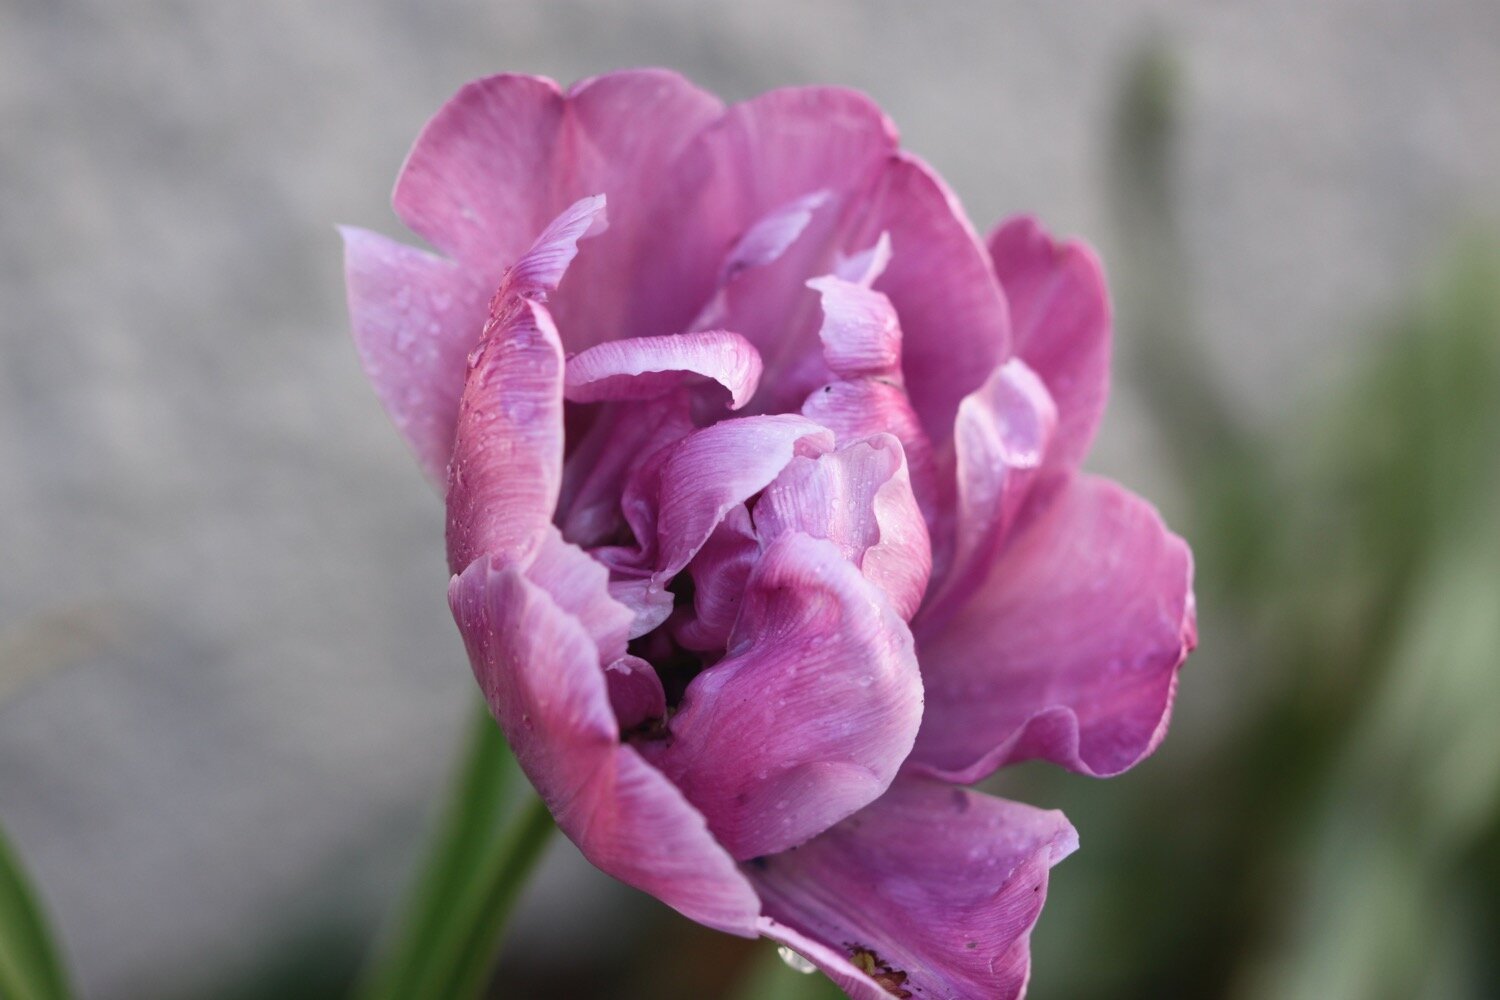 tulips 2.jpg